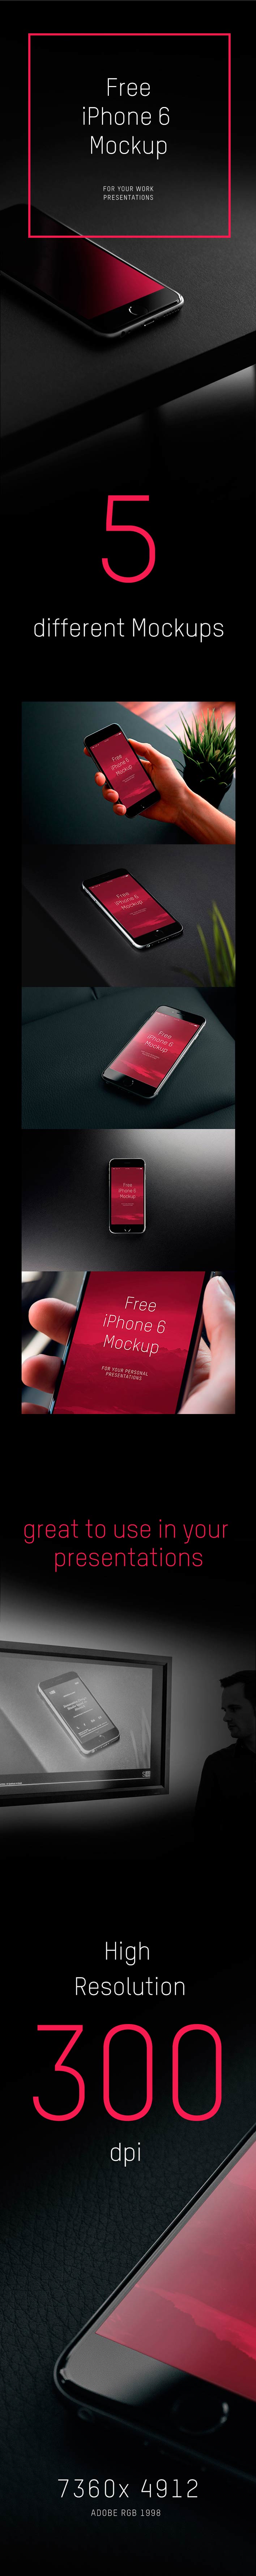 iphone-6-mockup-psd-free